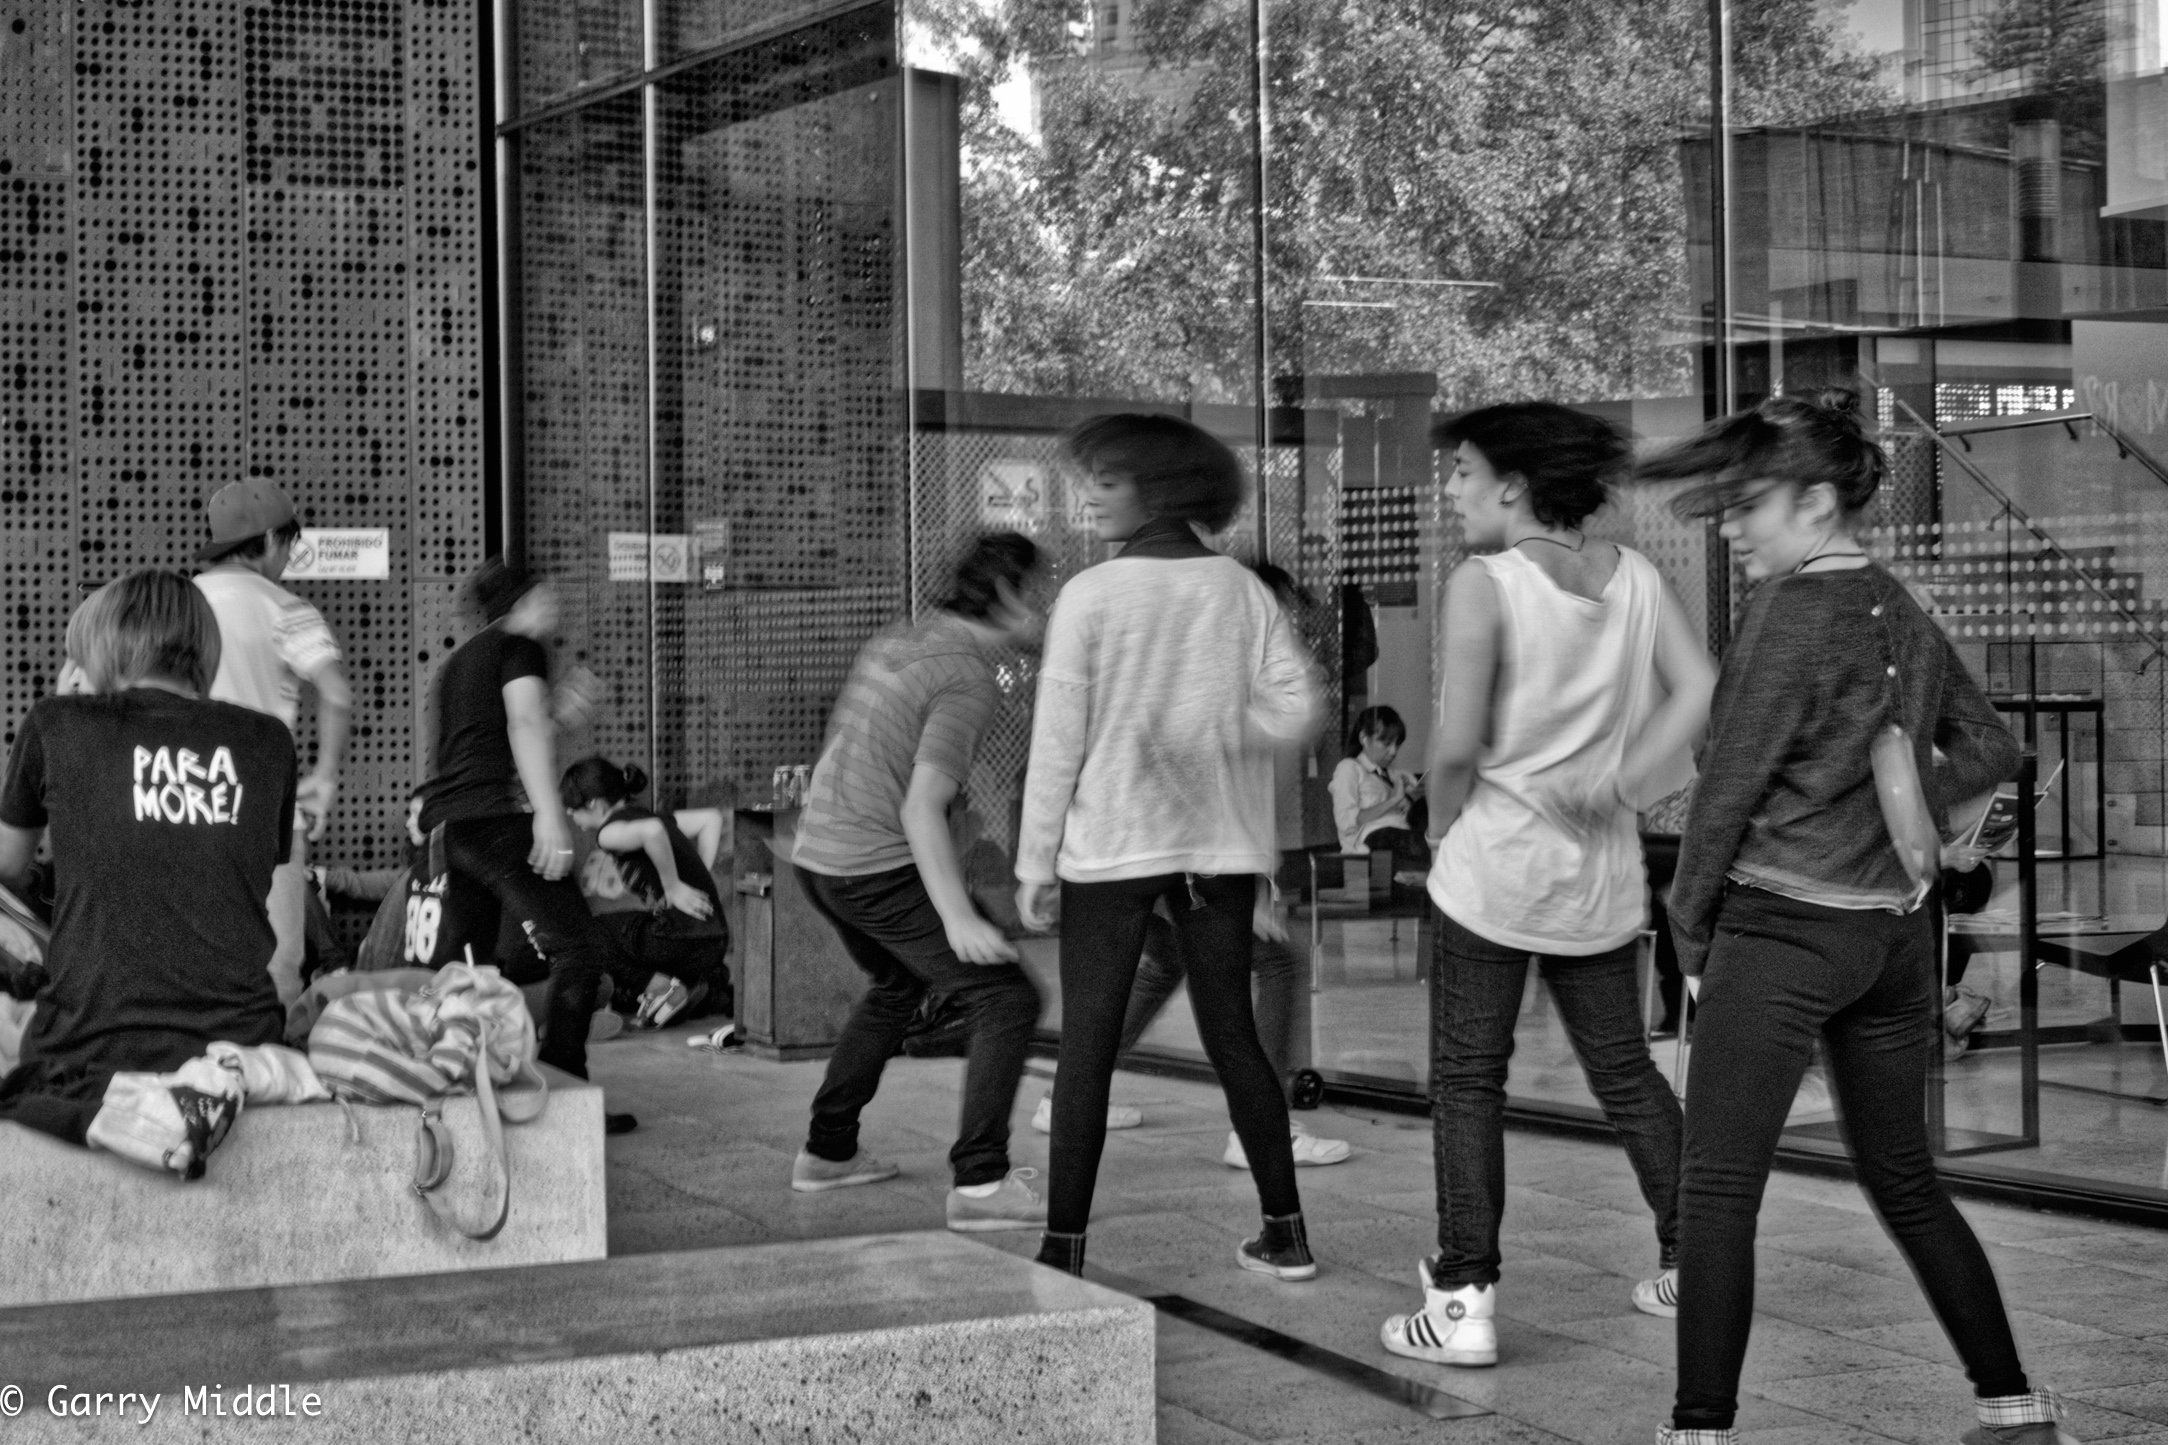 medium_Santiago dancing teenagers.jpg